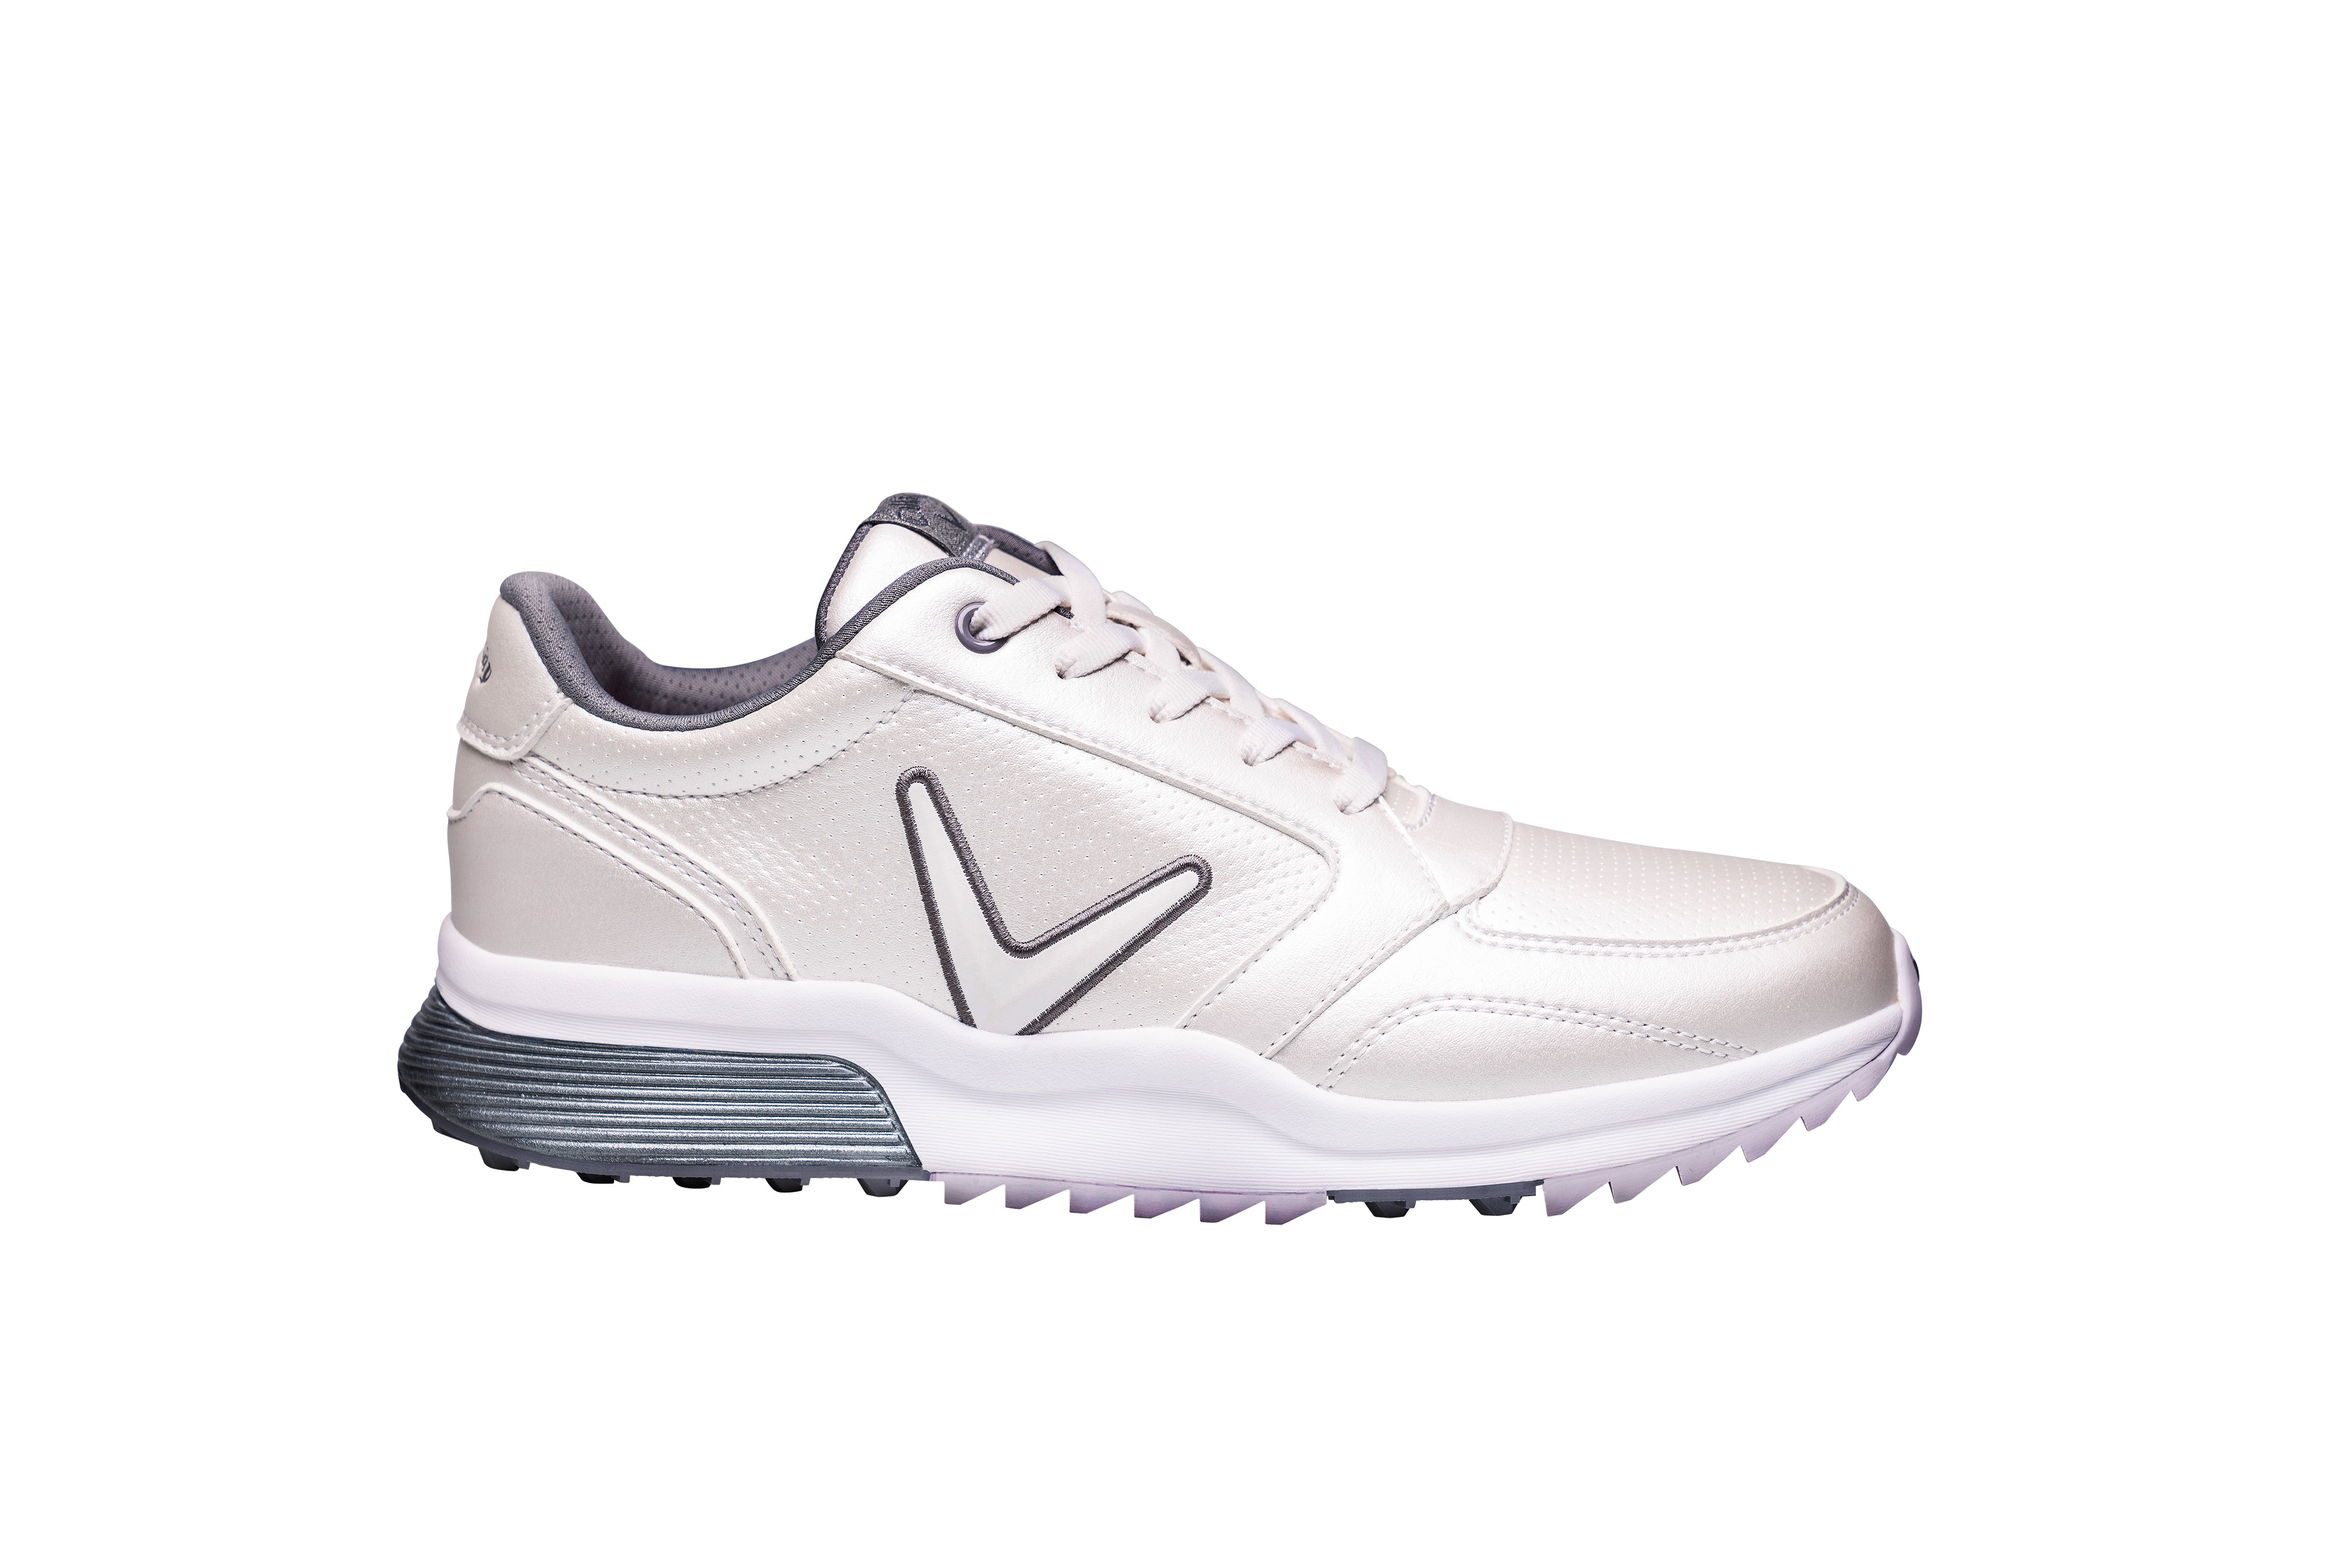 Callaway Aurora dámské golfové boty, perleťové/bílé, vel. 5 UK